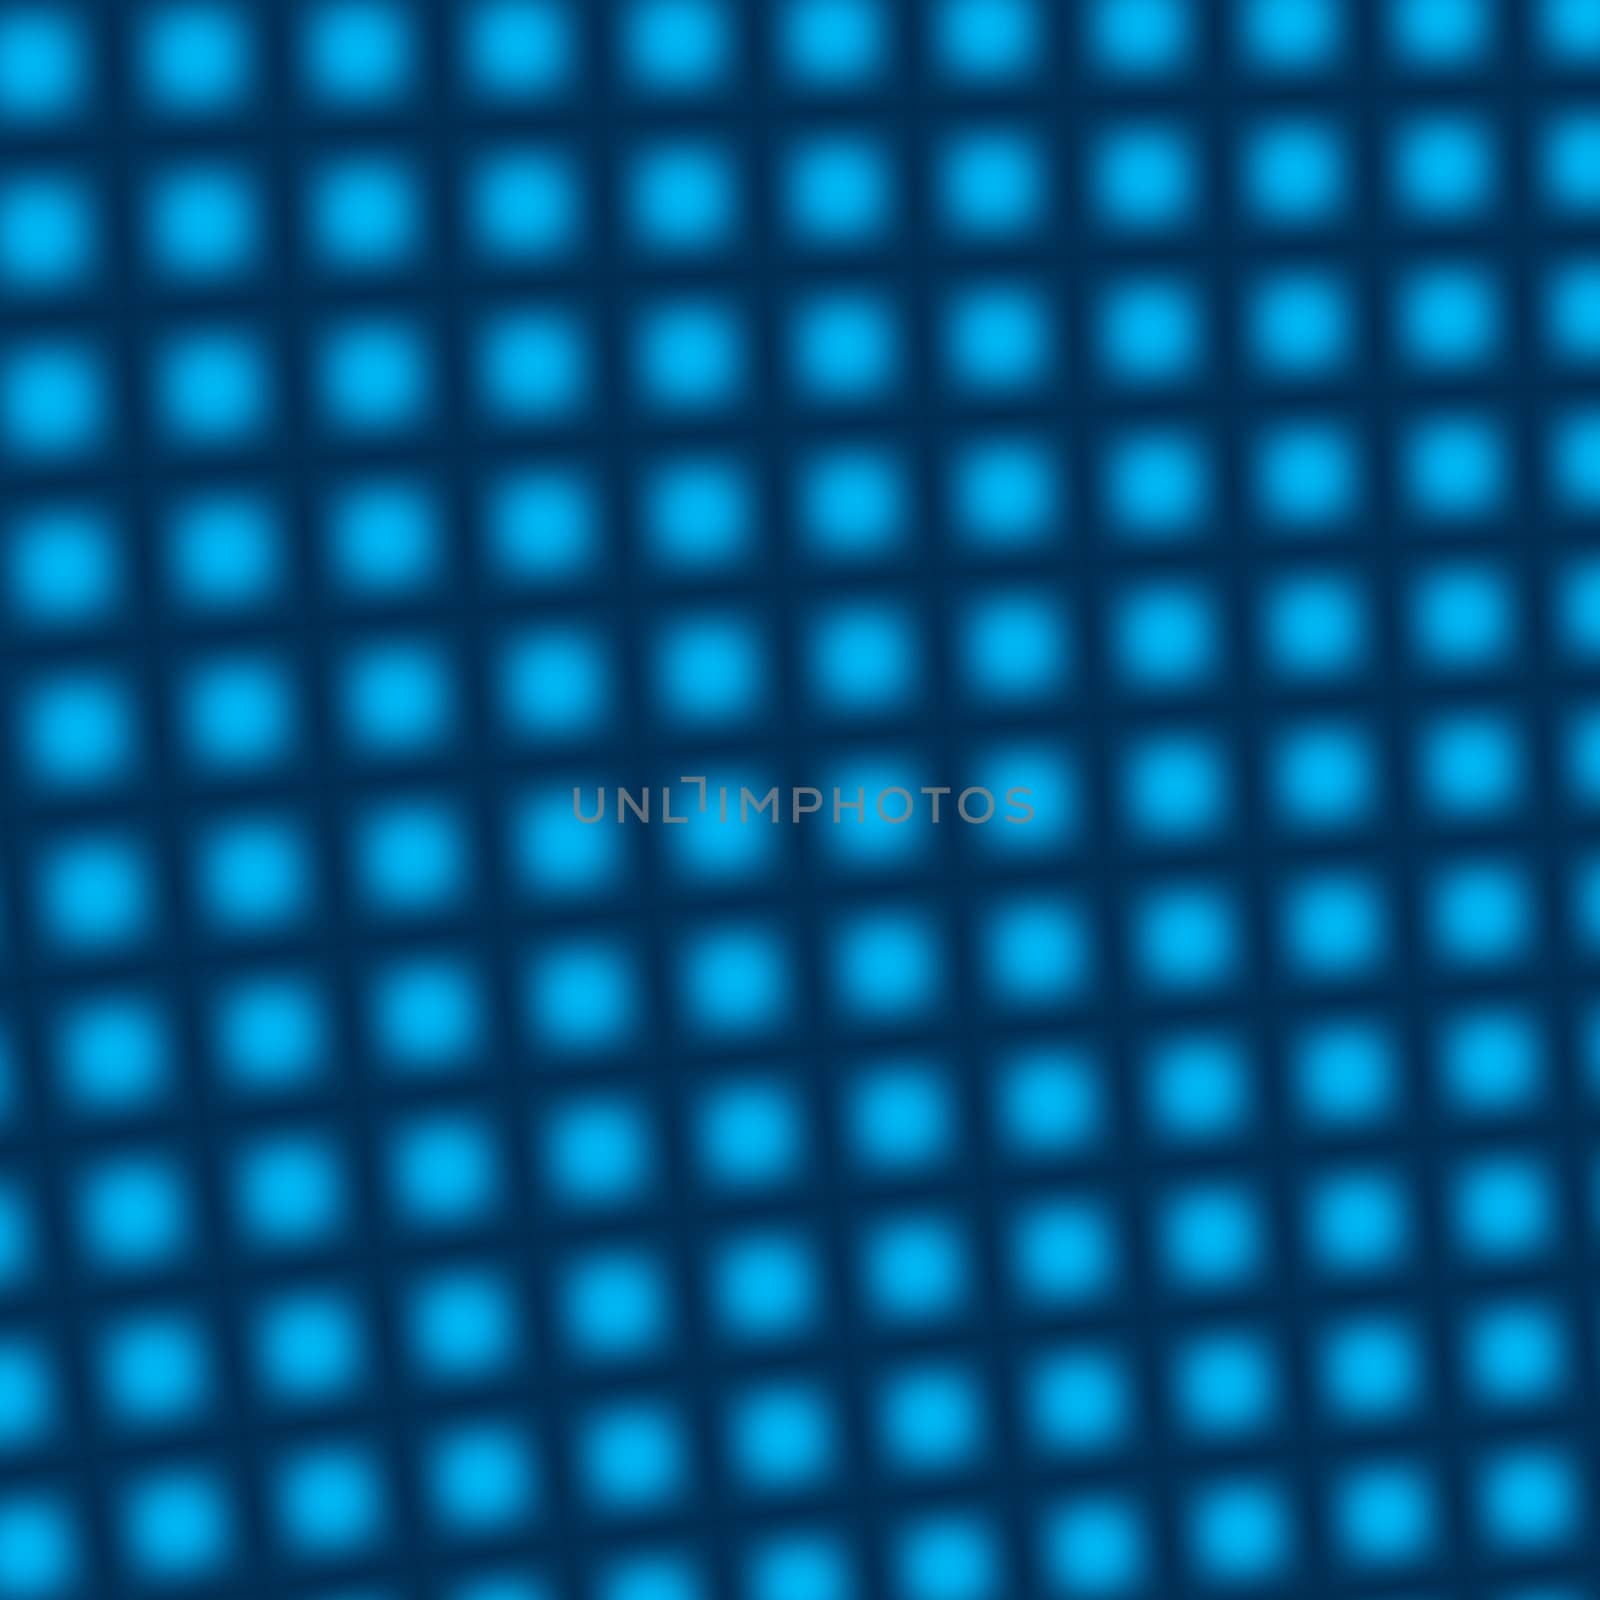 Abstract azure & blue fractal grid background by klinok